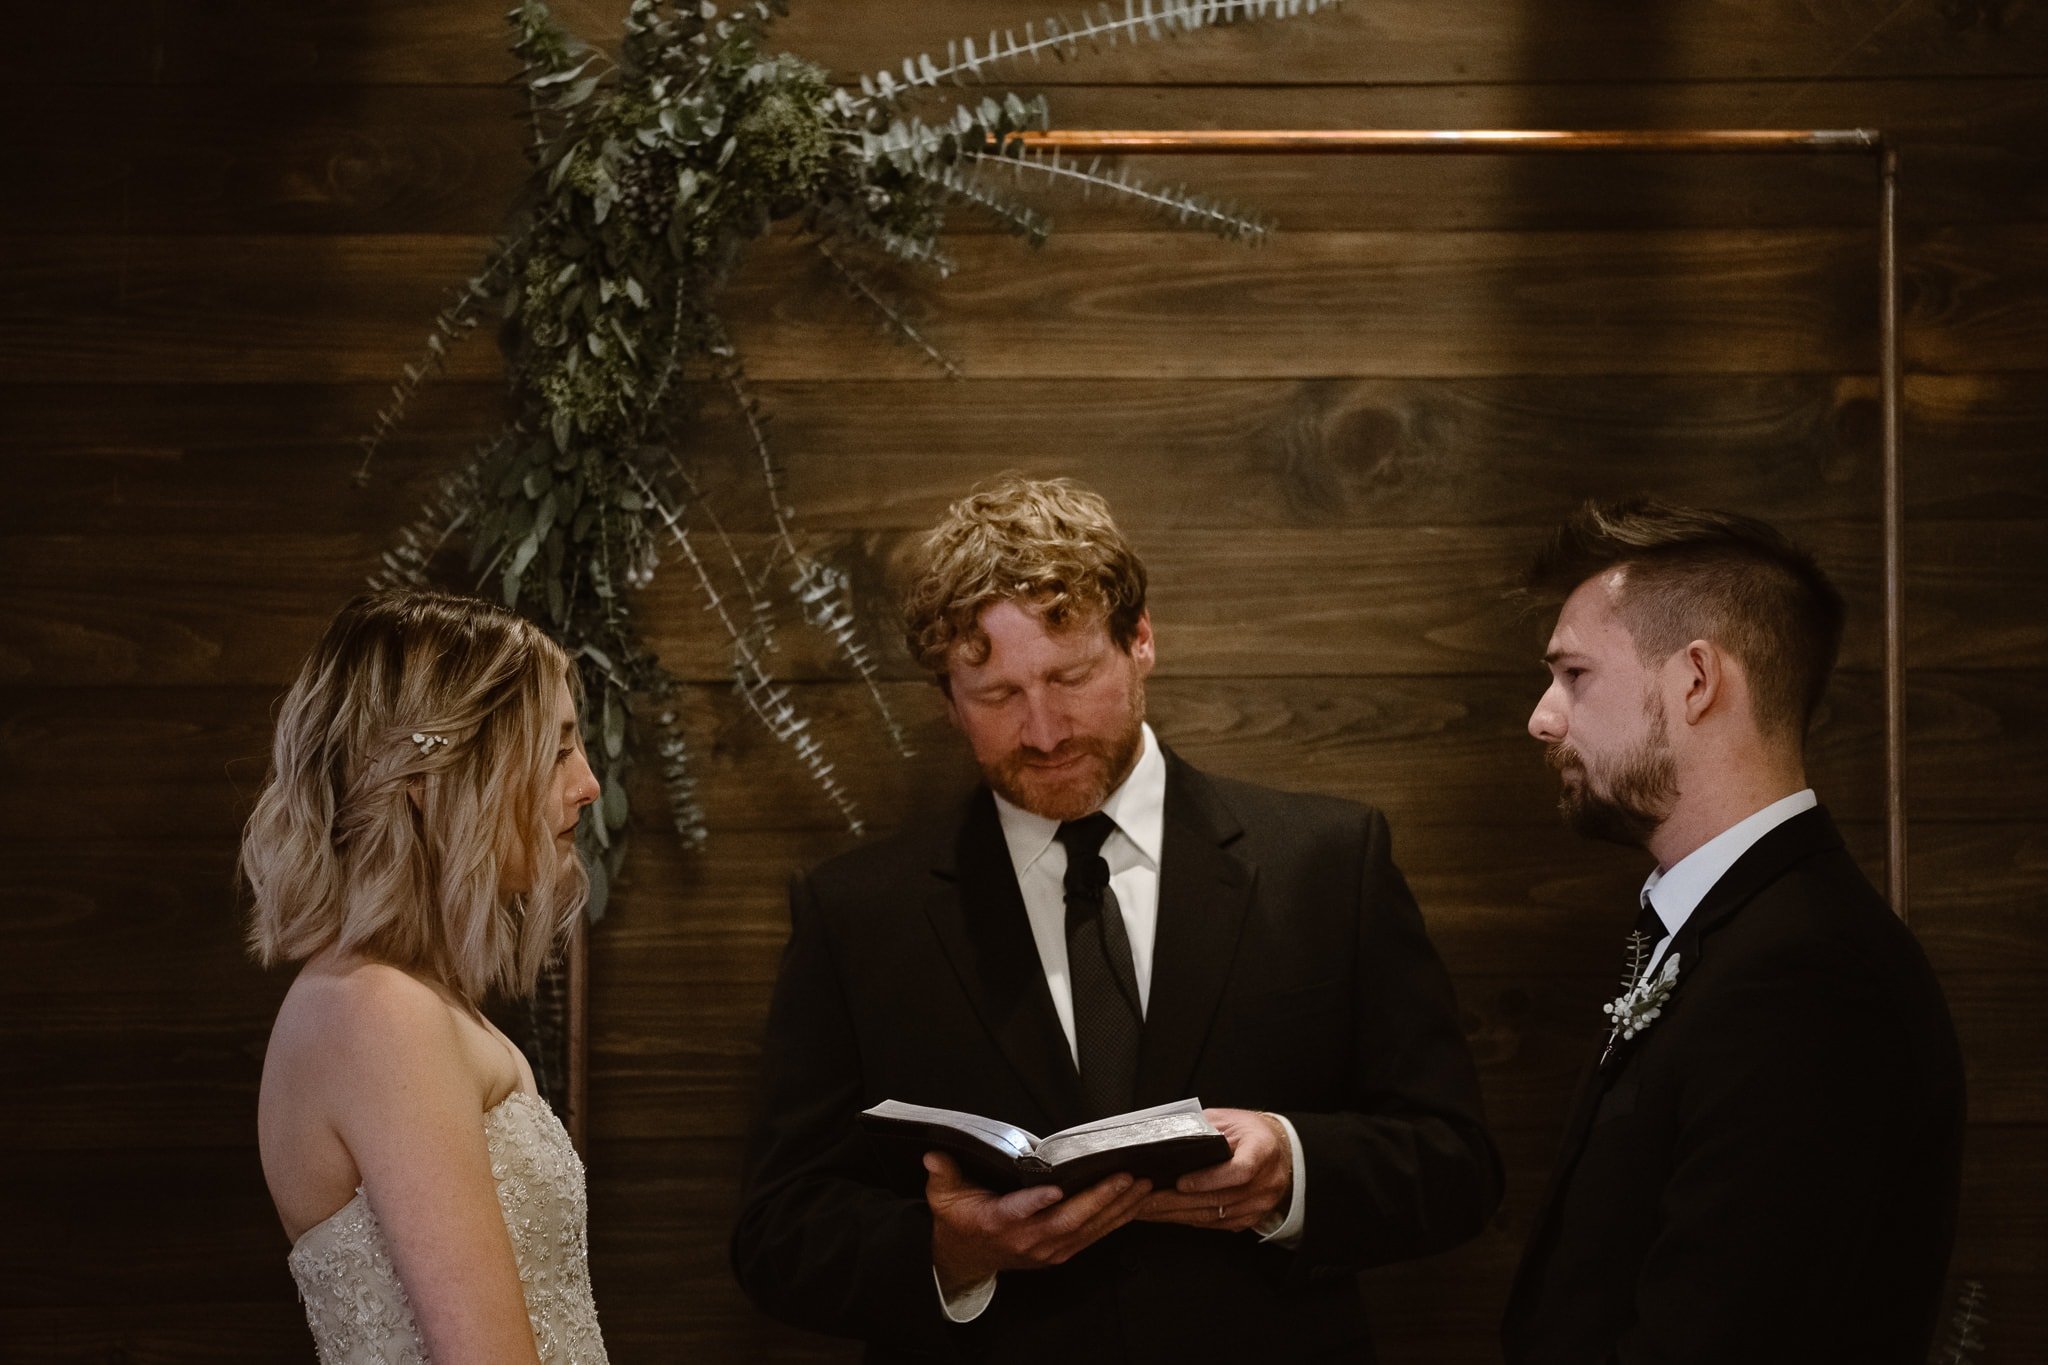 St Vrain Wedding Photographer | Longmont Wedding Photographer | Colorado Winter Wedding Photographer, Colorado industrial chic wedding ceremony,